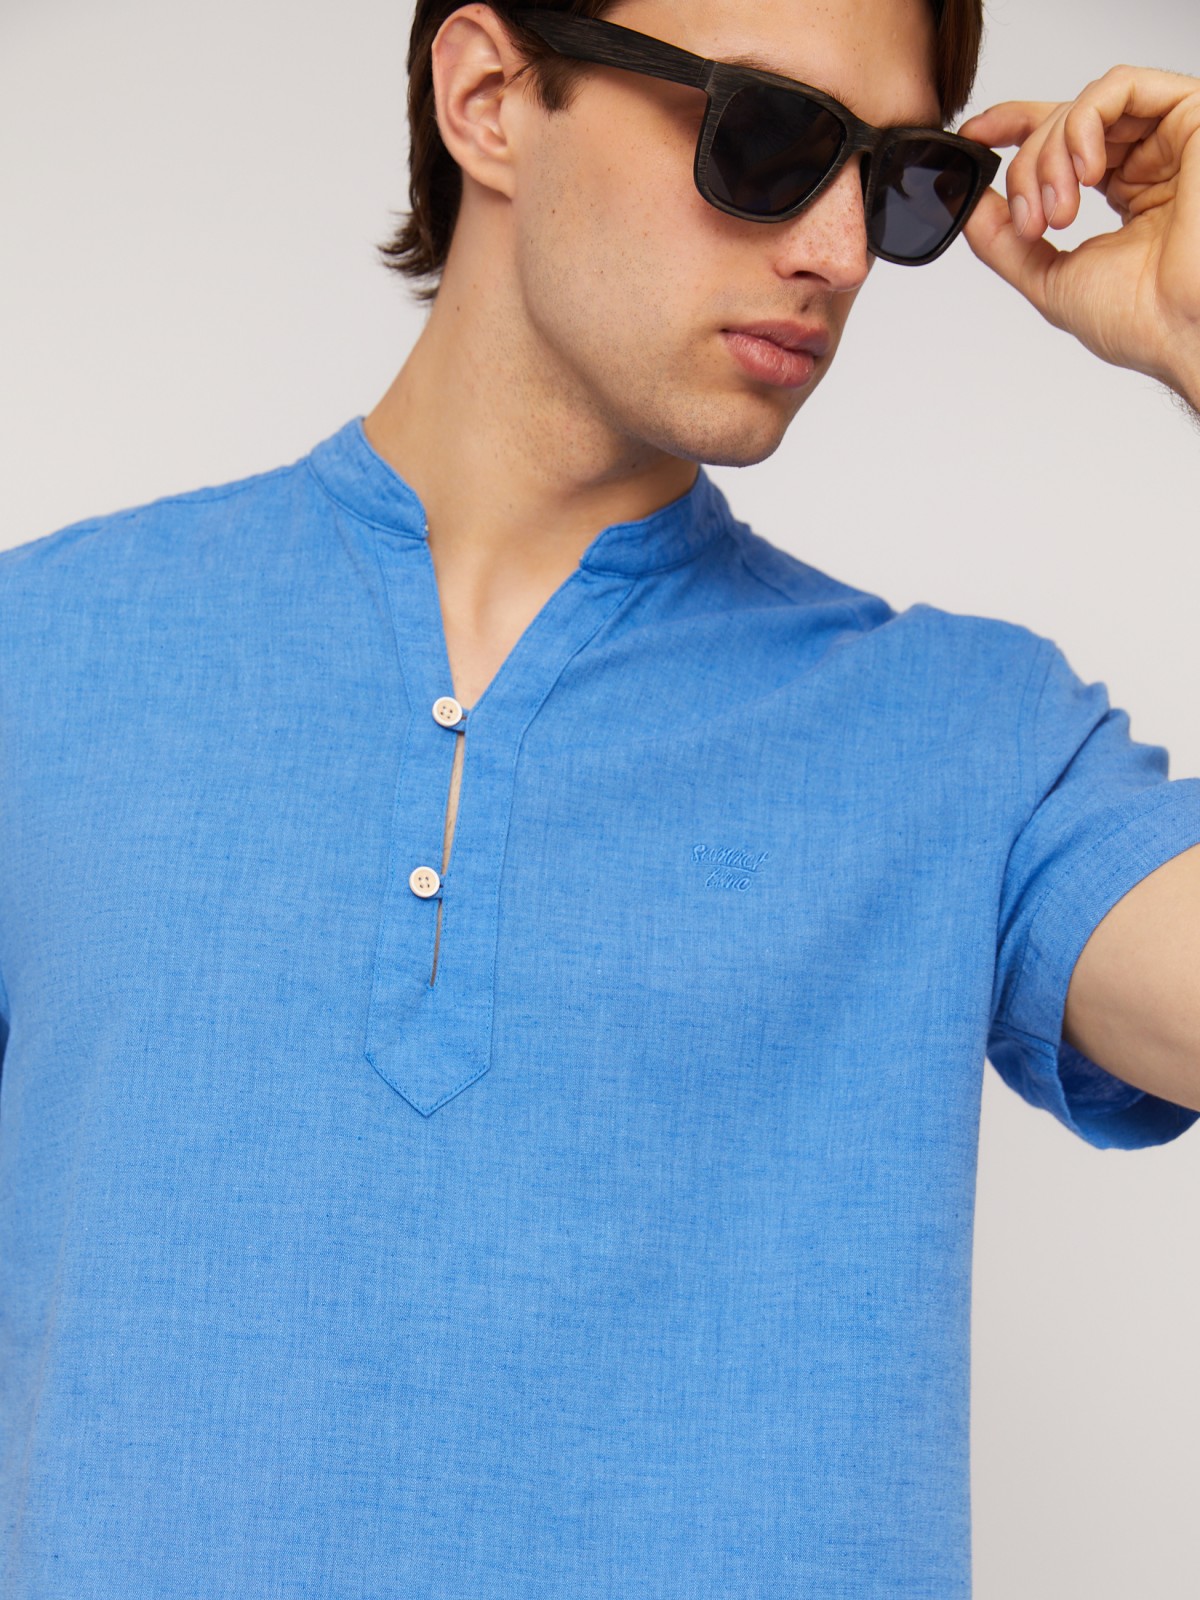 Льняная рубашка с коротким рукавом zolla 014242216073, цвет светло-голубой, размер M - фото 4